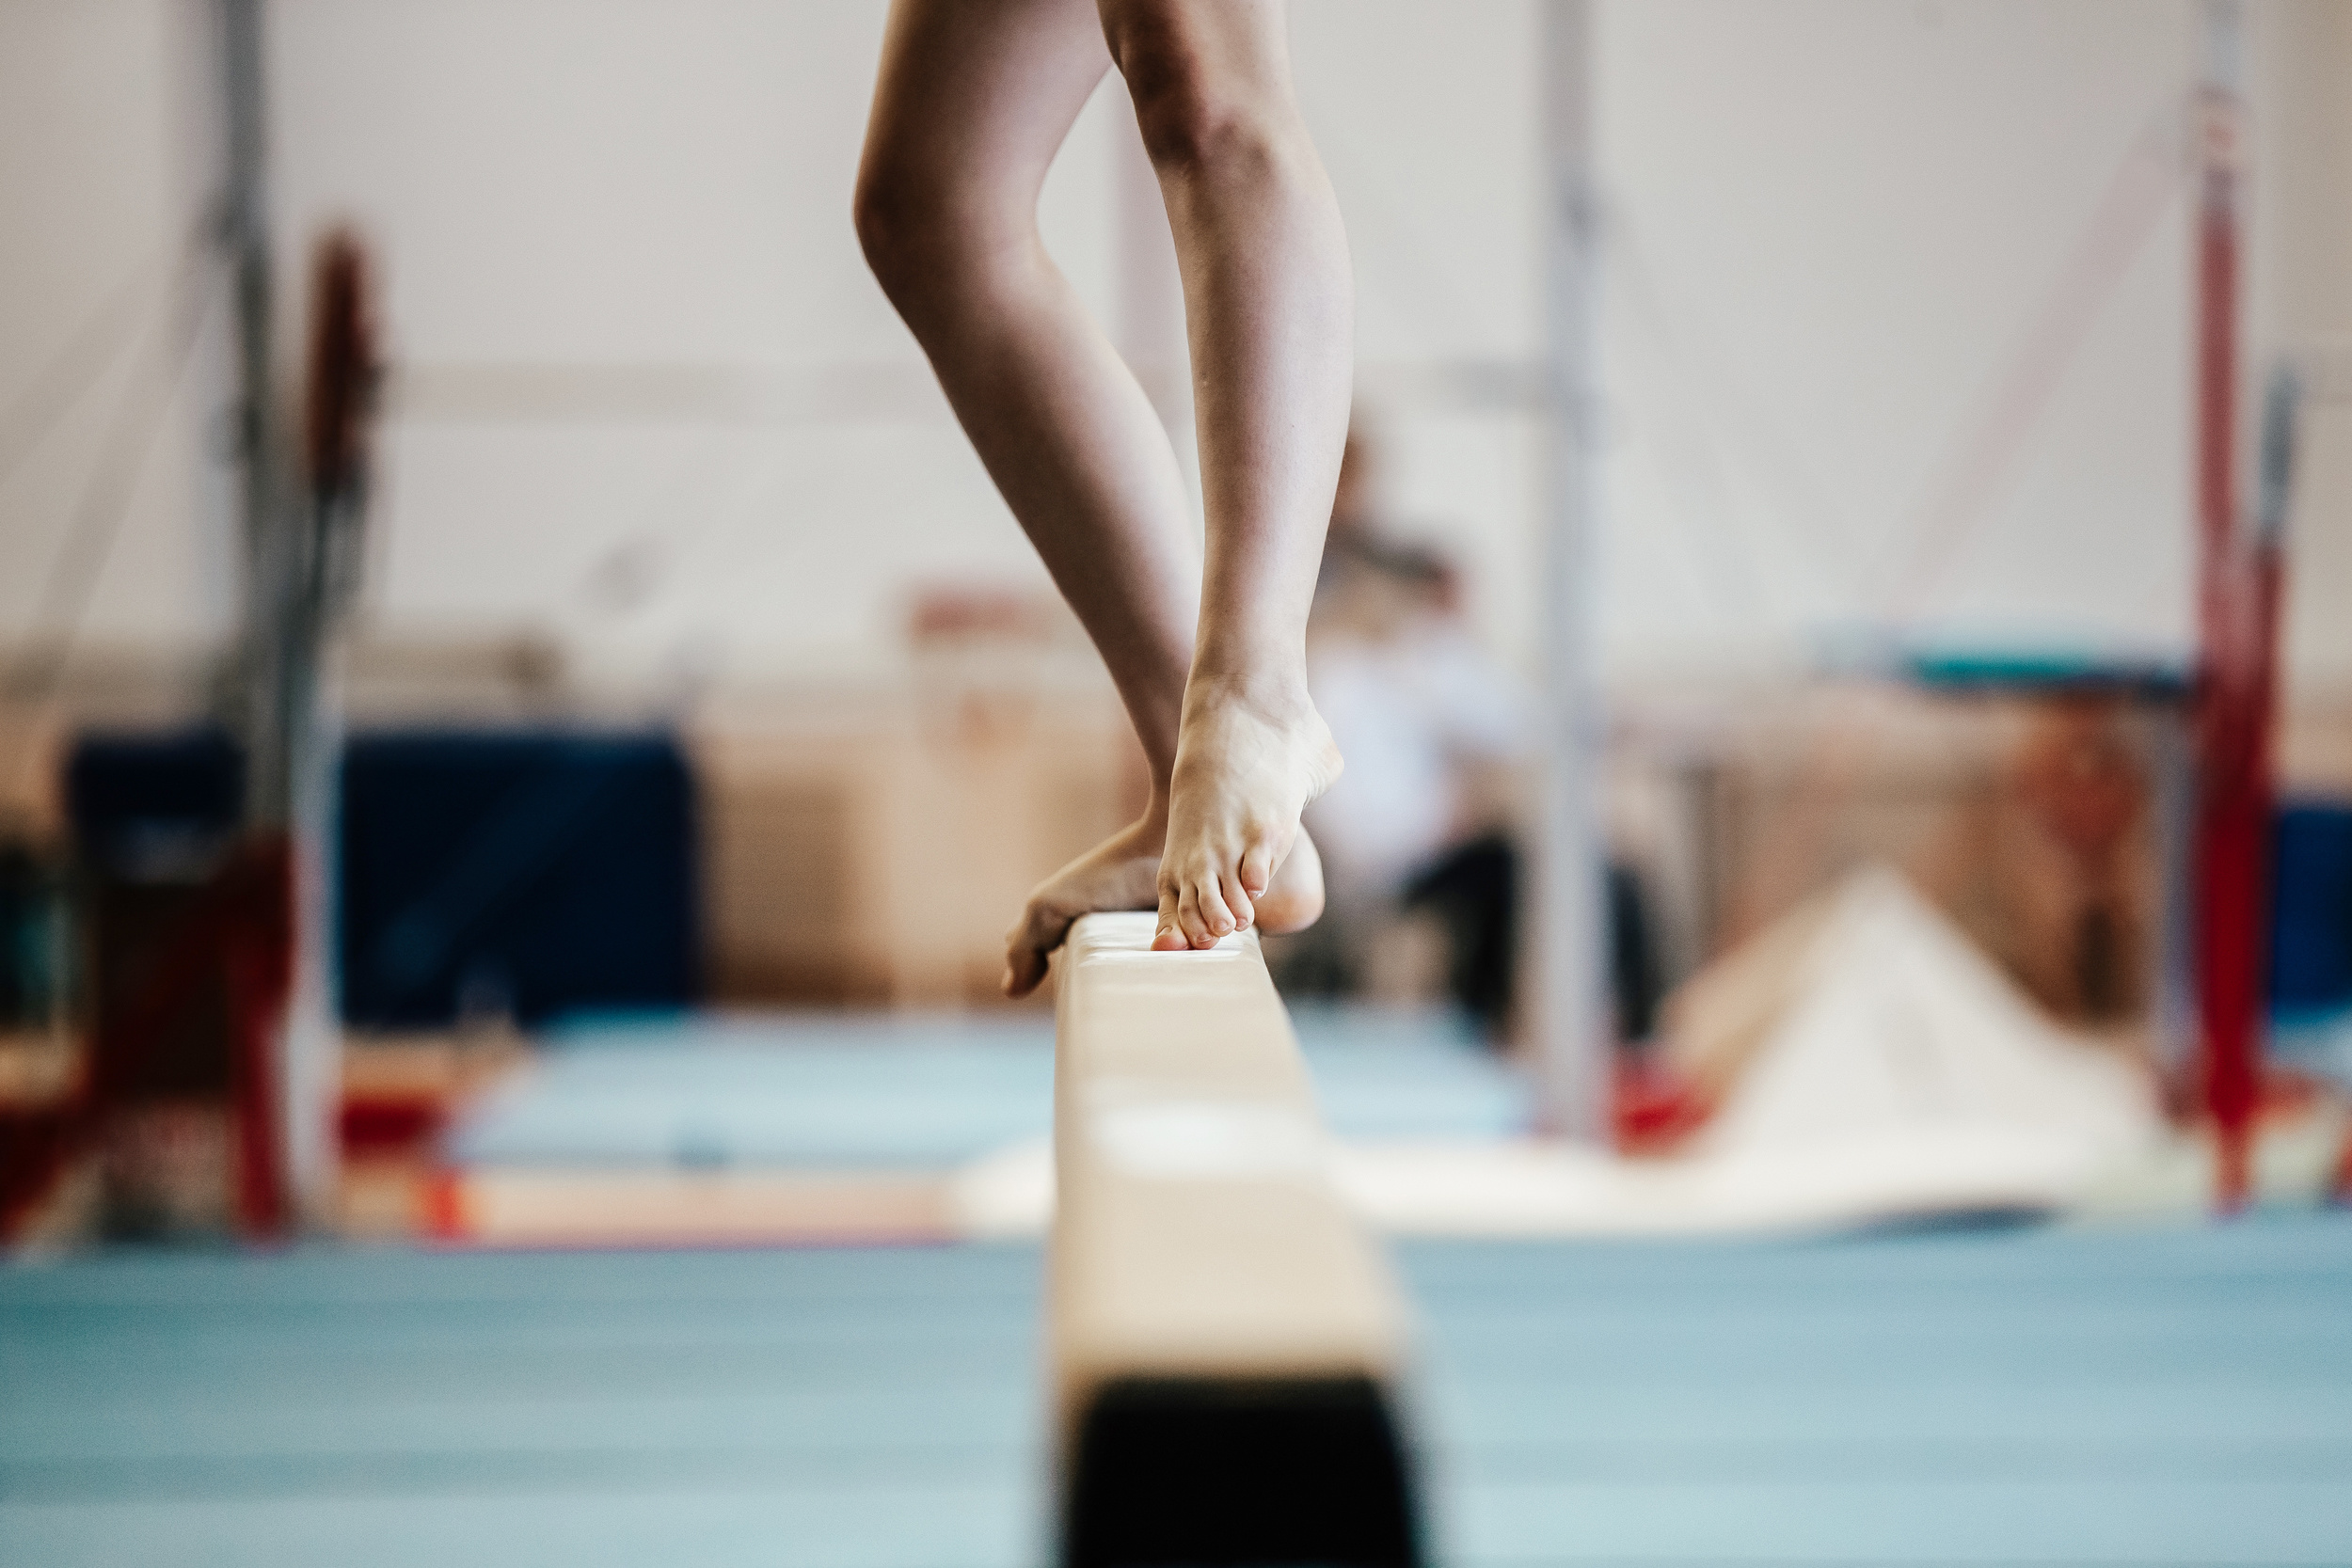 competition gymnastics exercises on balance beam girl gymnast